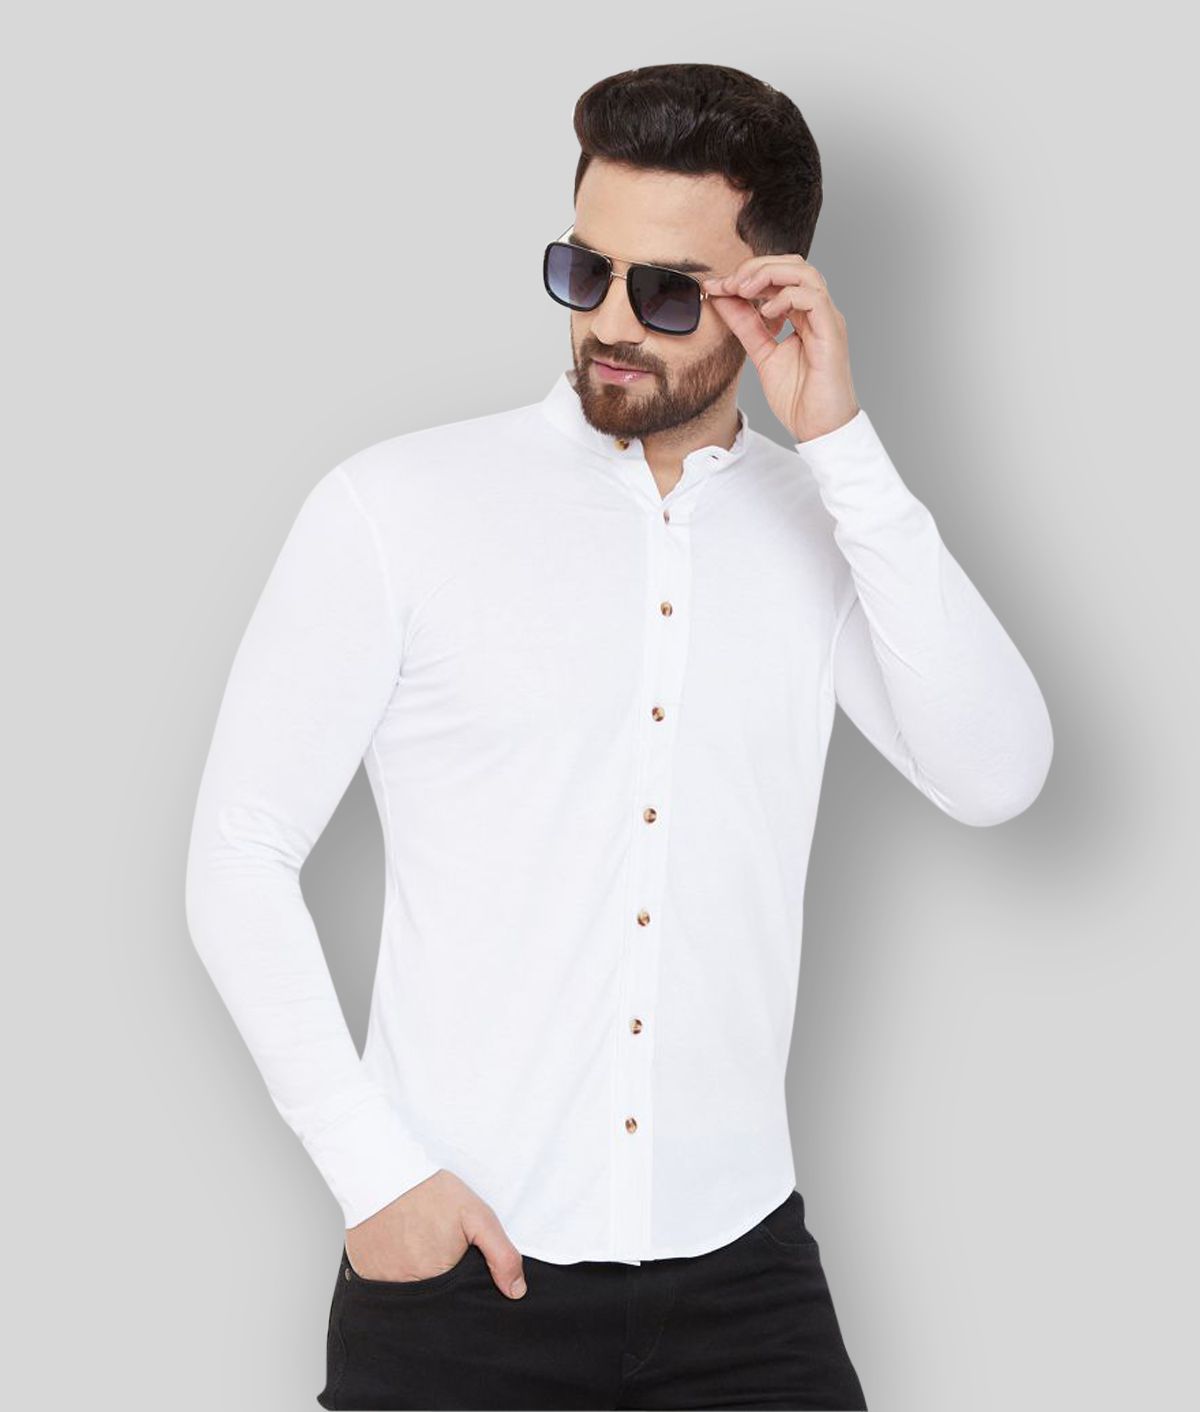     			GESPO - White Cotton Blend Regular Fit Men's Casual Shirt (Pack of 1)